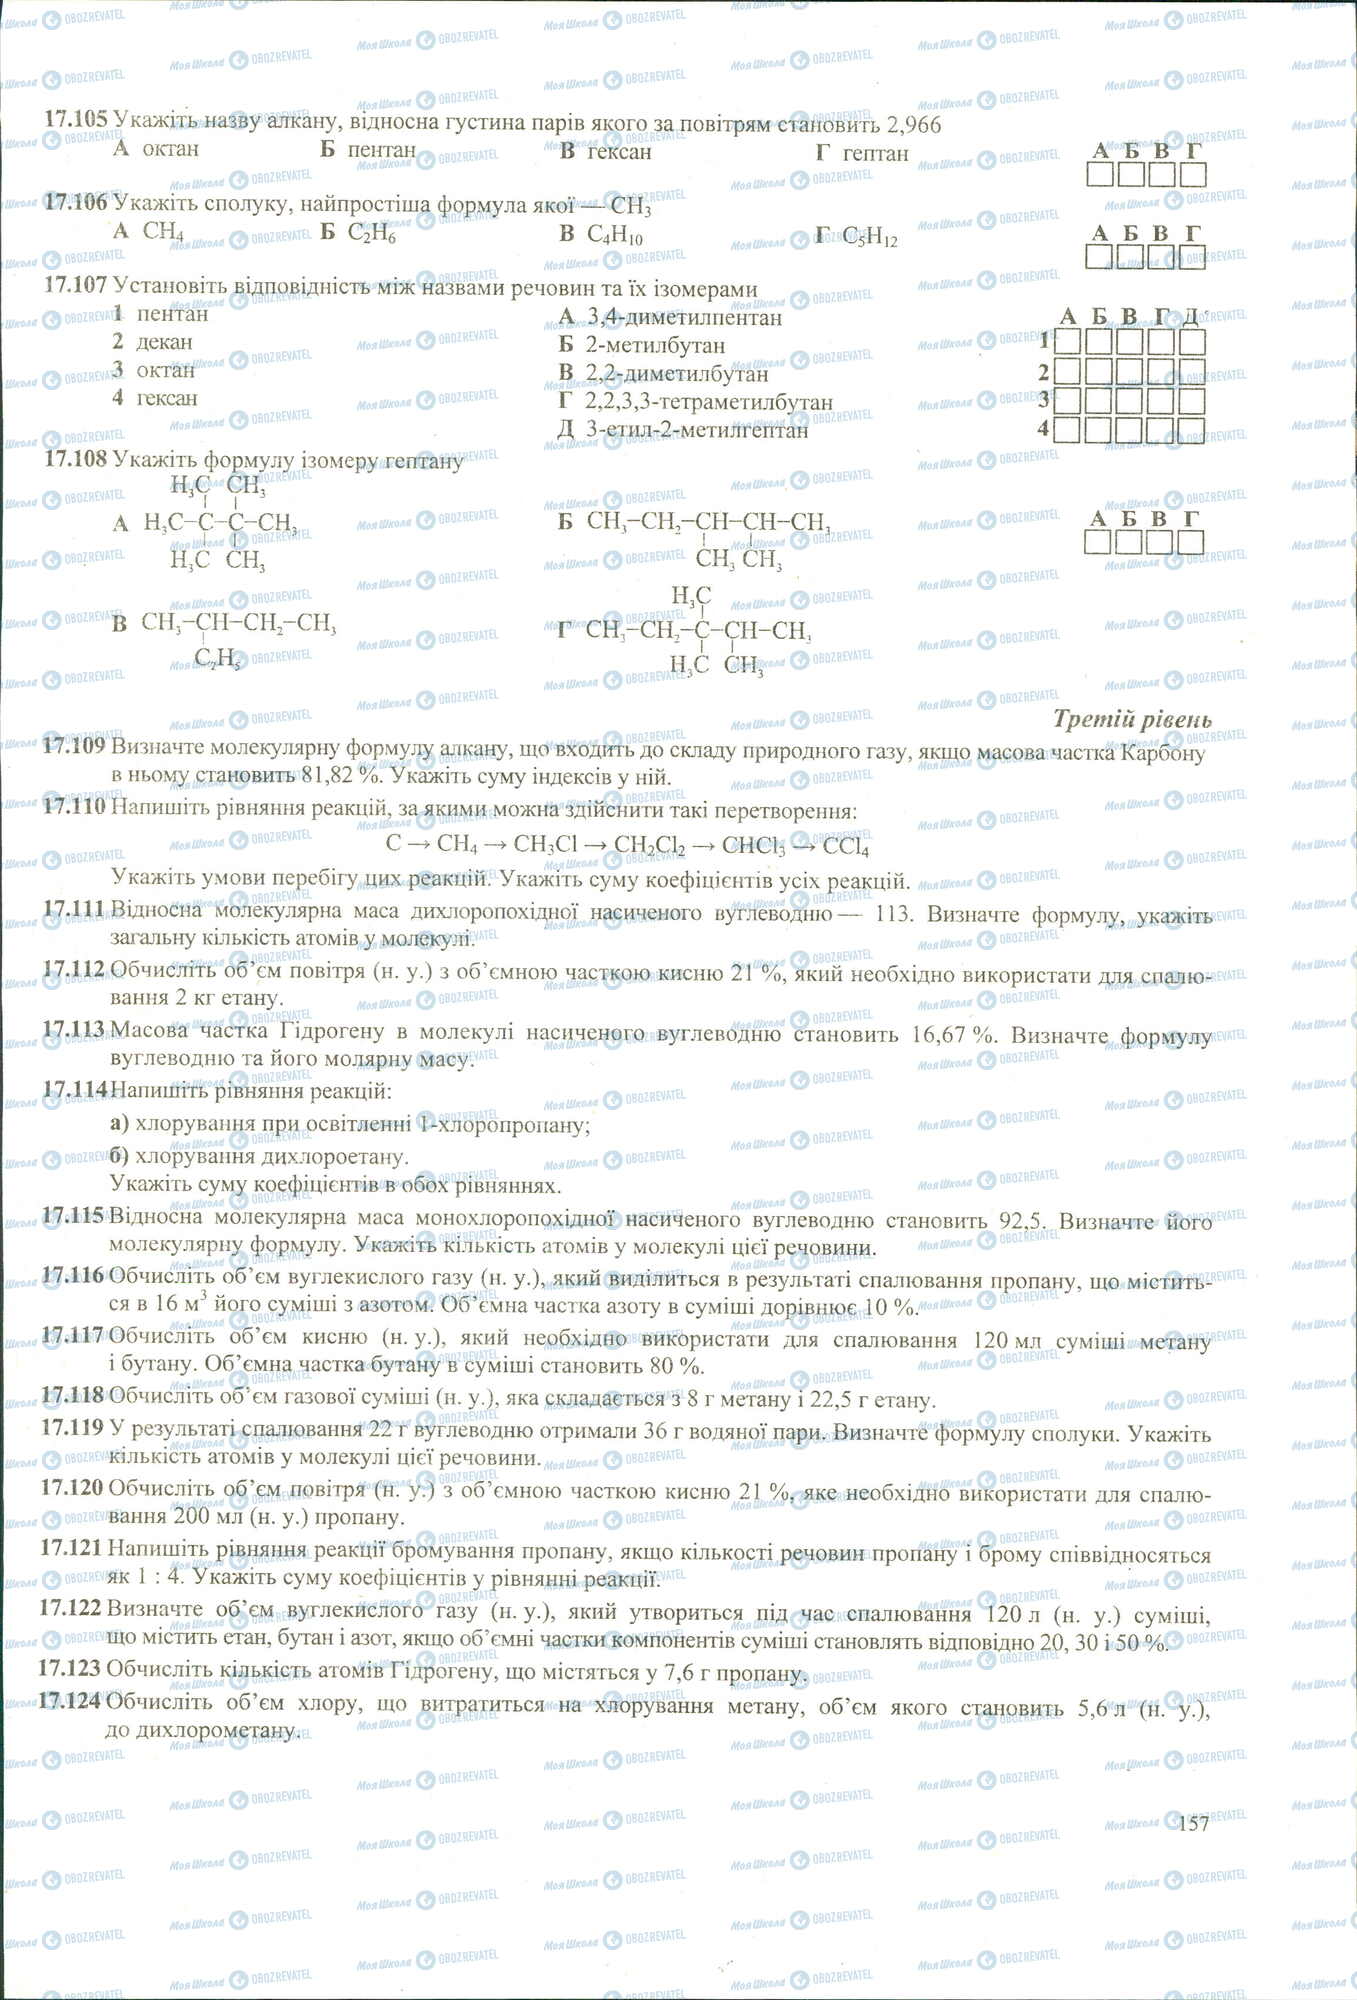 ЗНО Химия 11 класс страница 105-124